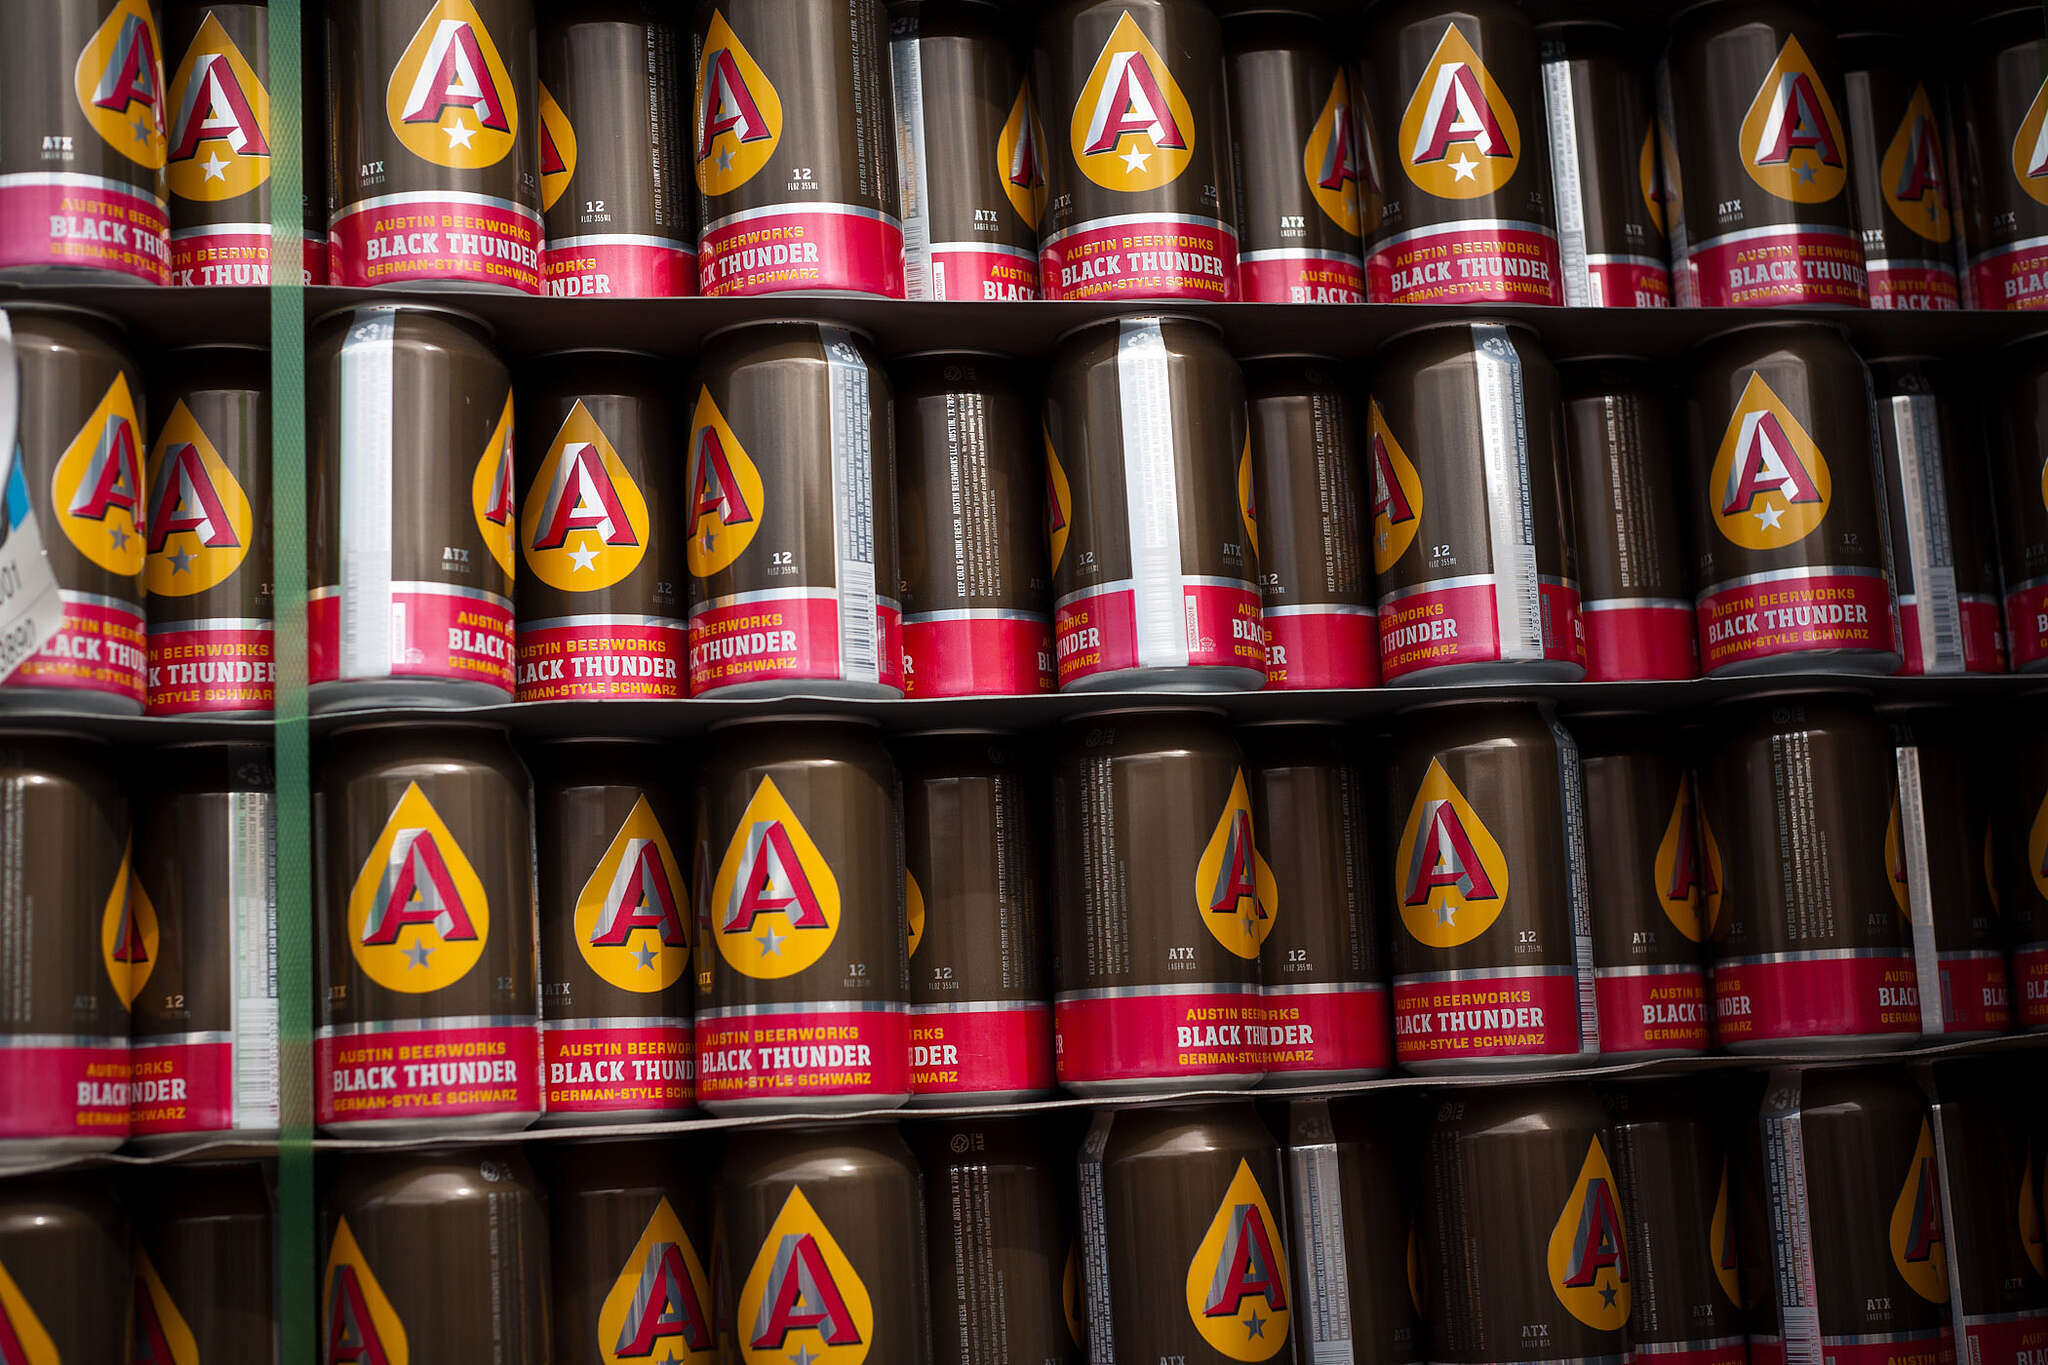 Austin Beerworks cans